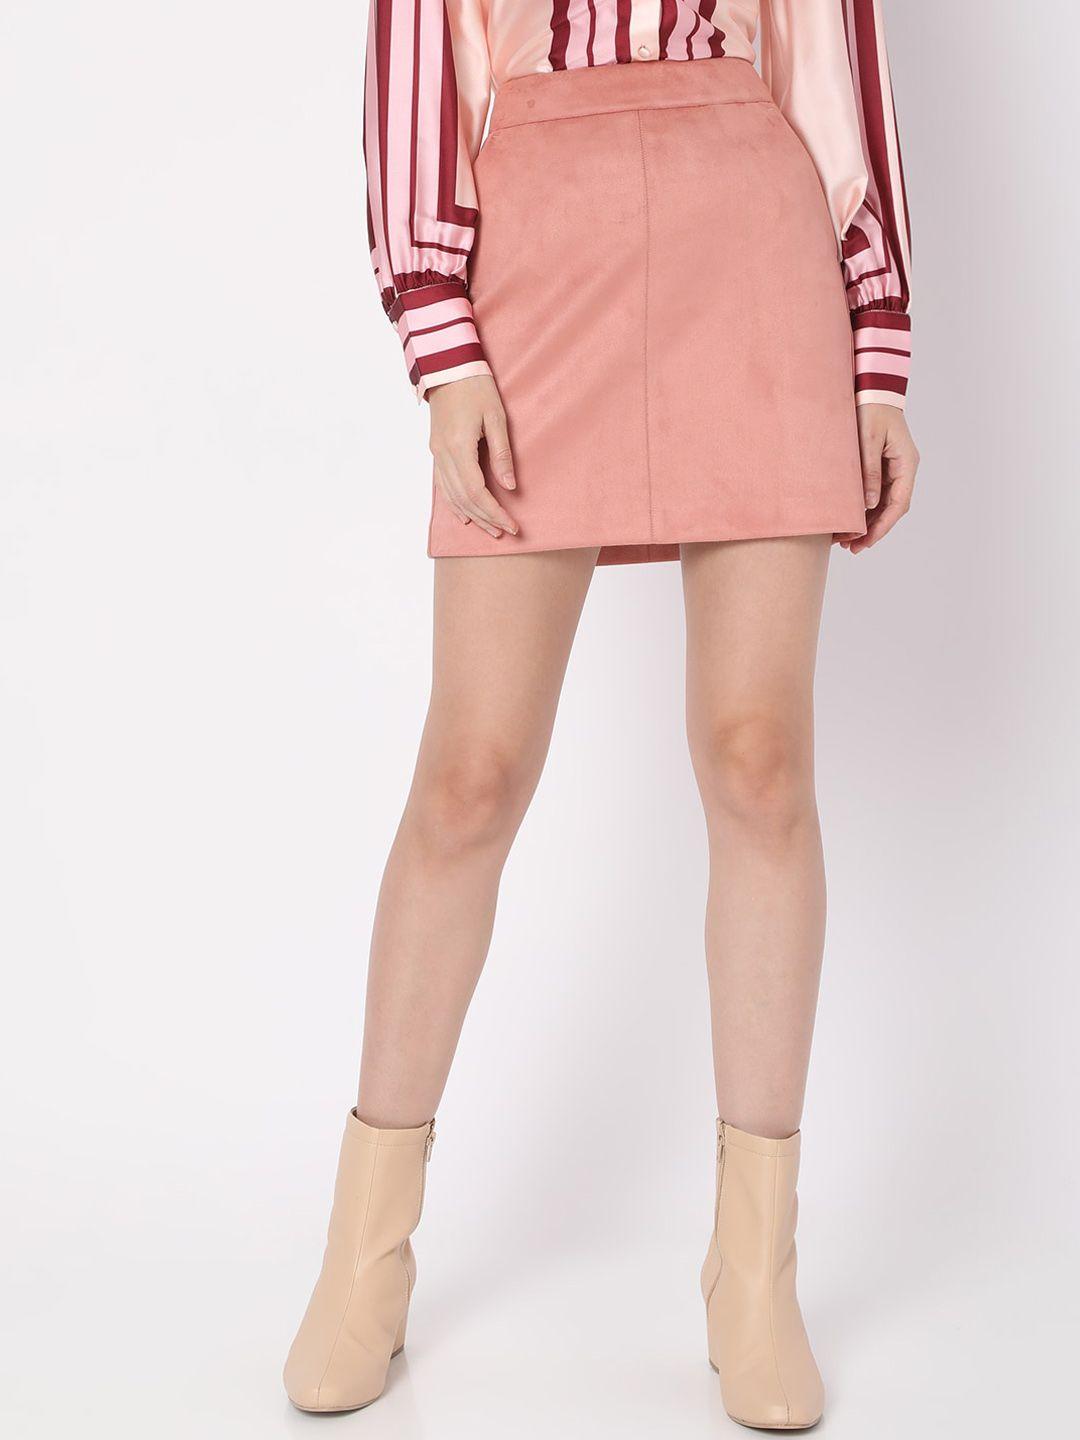 Vero Moda Women Pink Solid Above Knee Length Penil Skirts